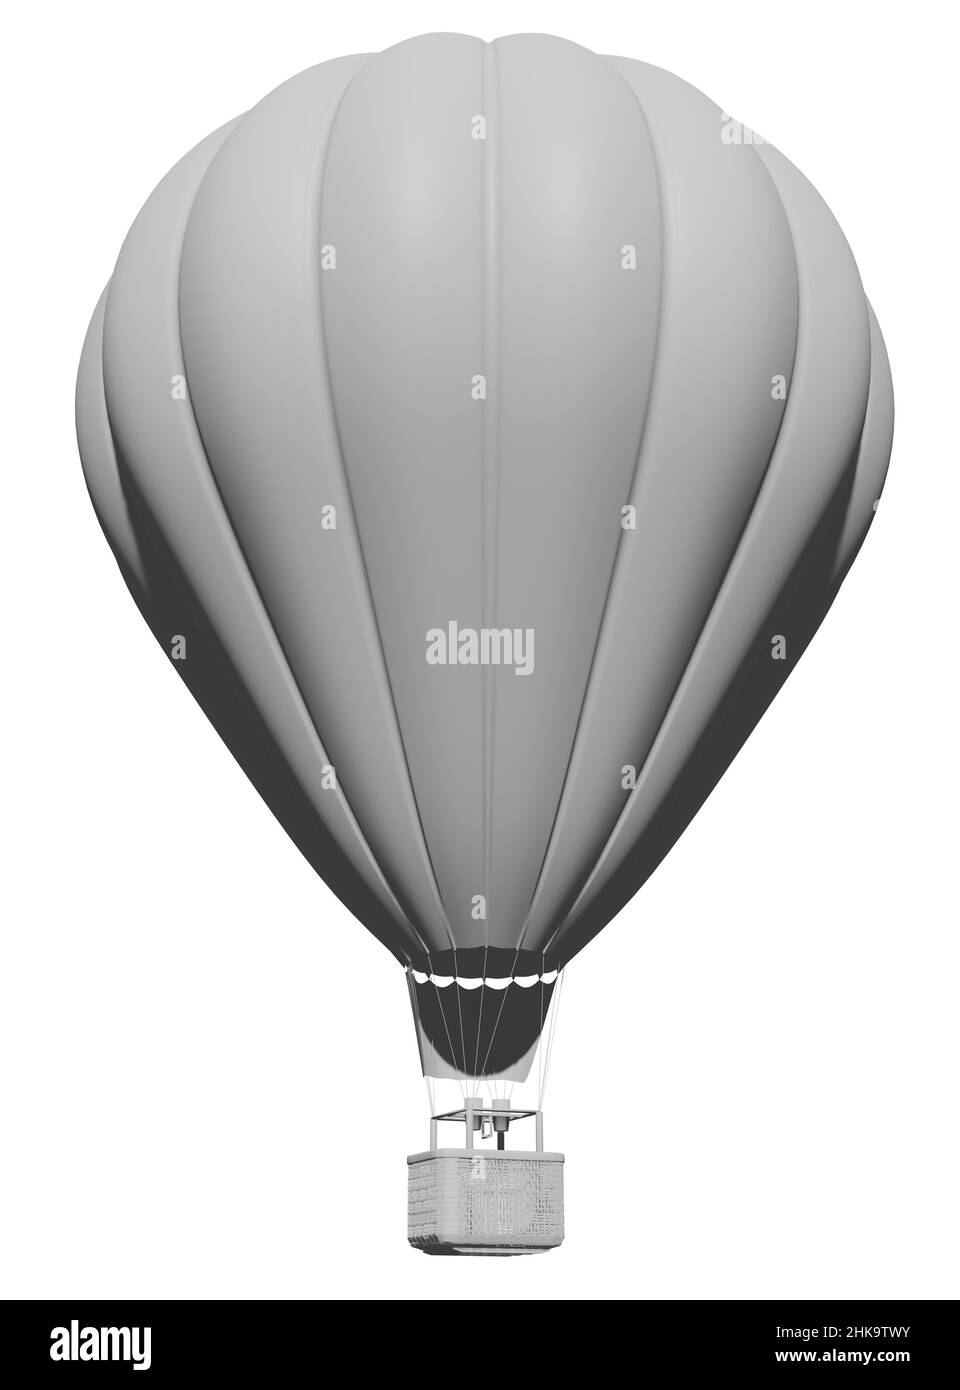 Balloon man Black and White Stock Photos & Images - Alamy